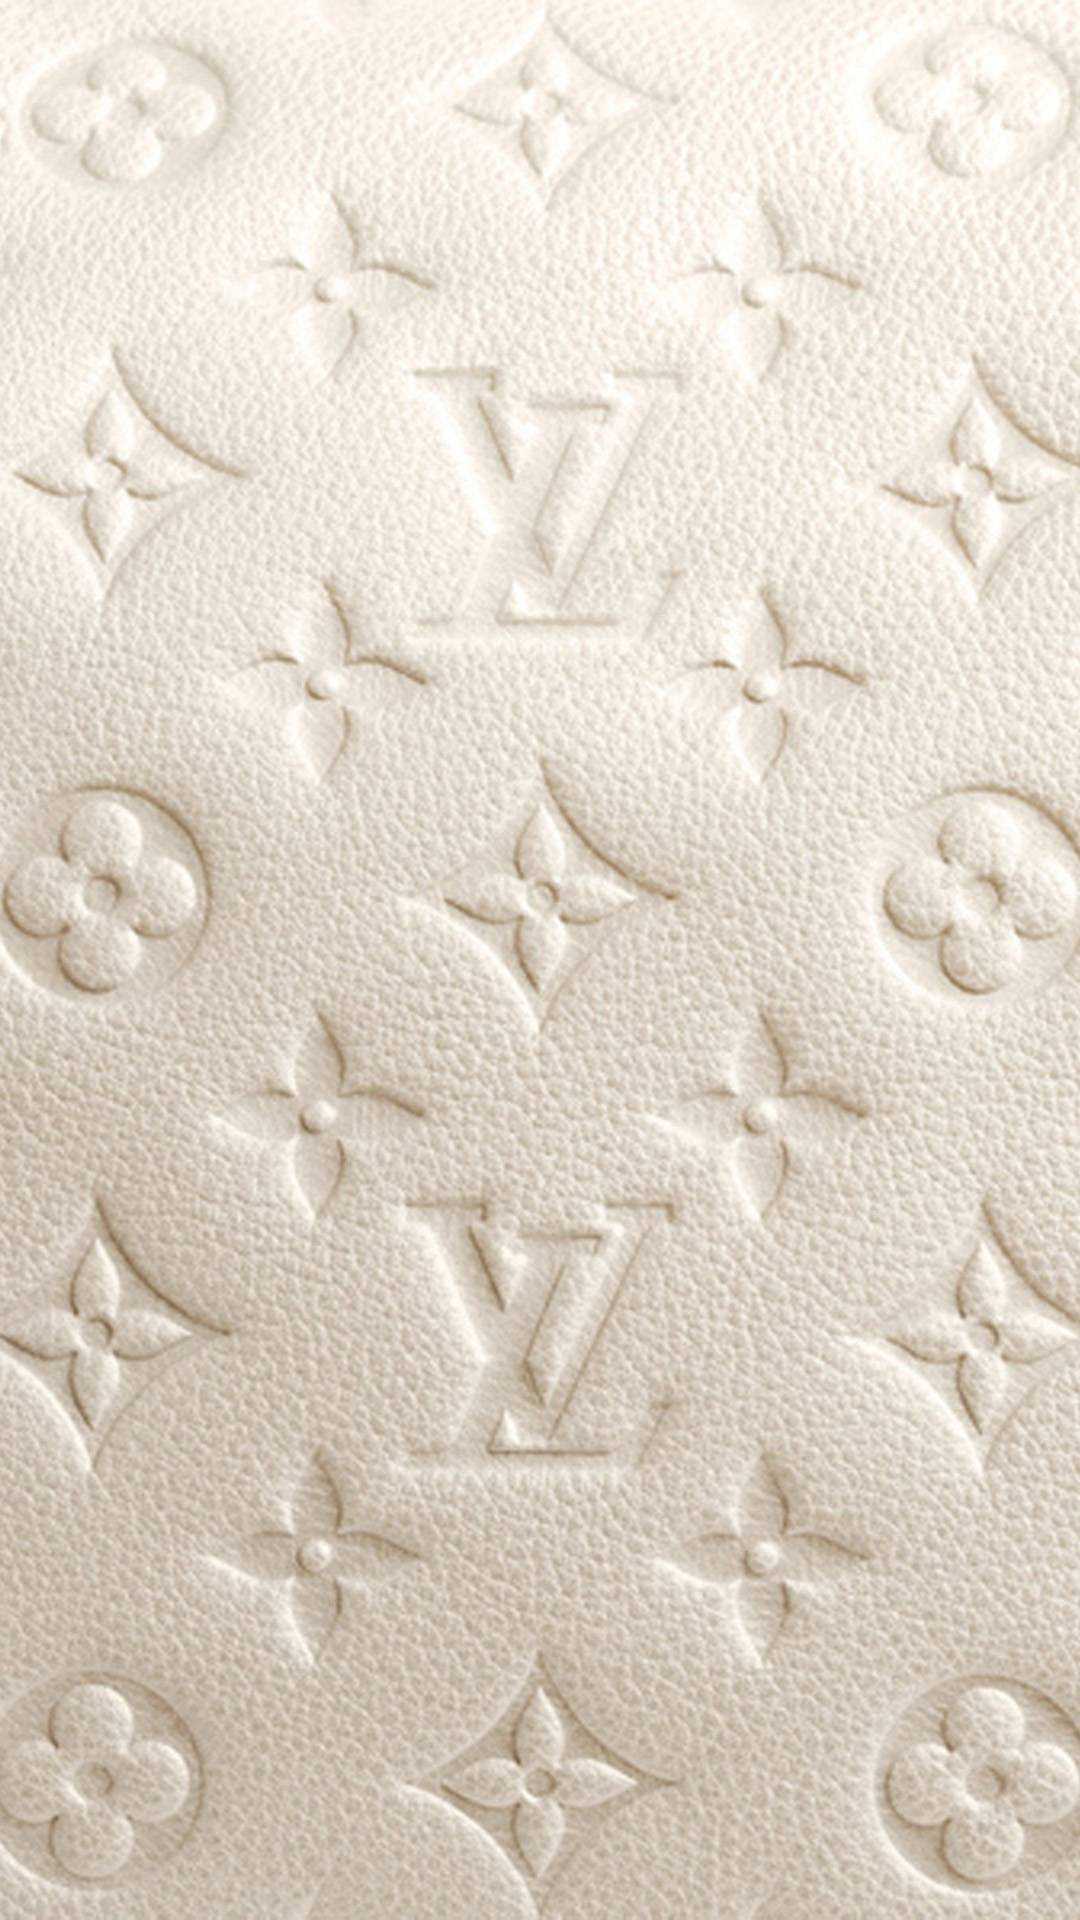 Louis Vuitton Wallpaper Iphone Louis Vuitton